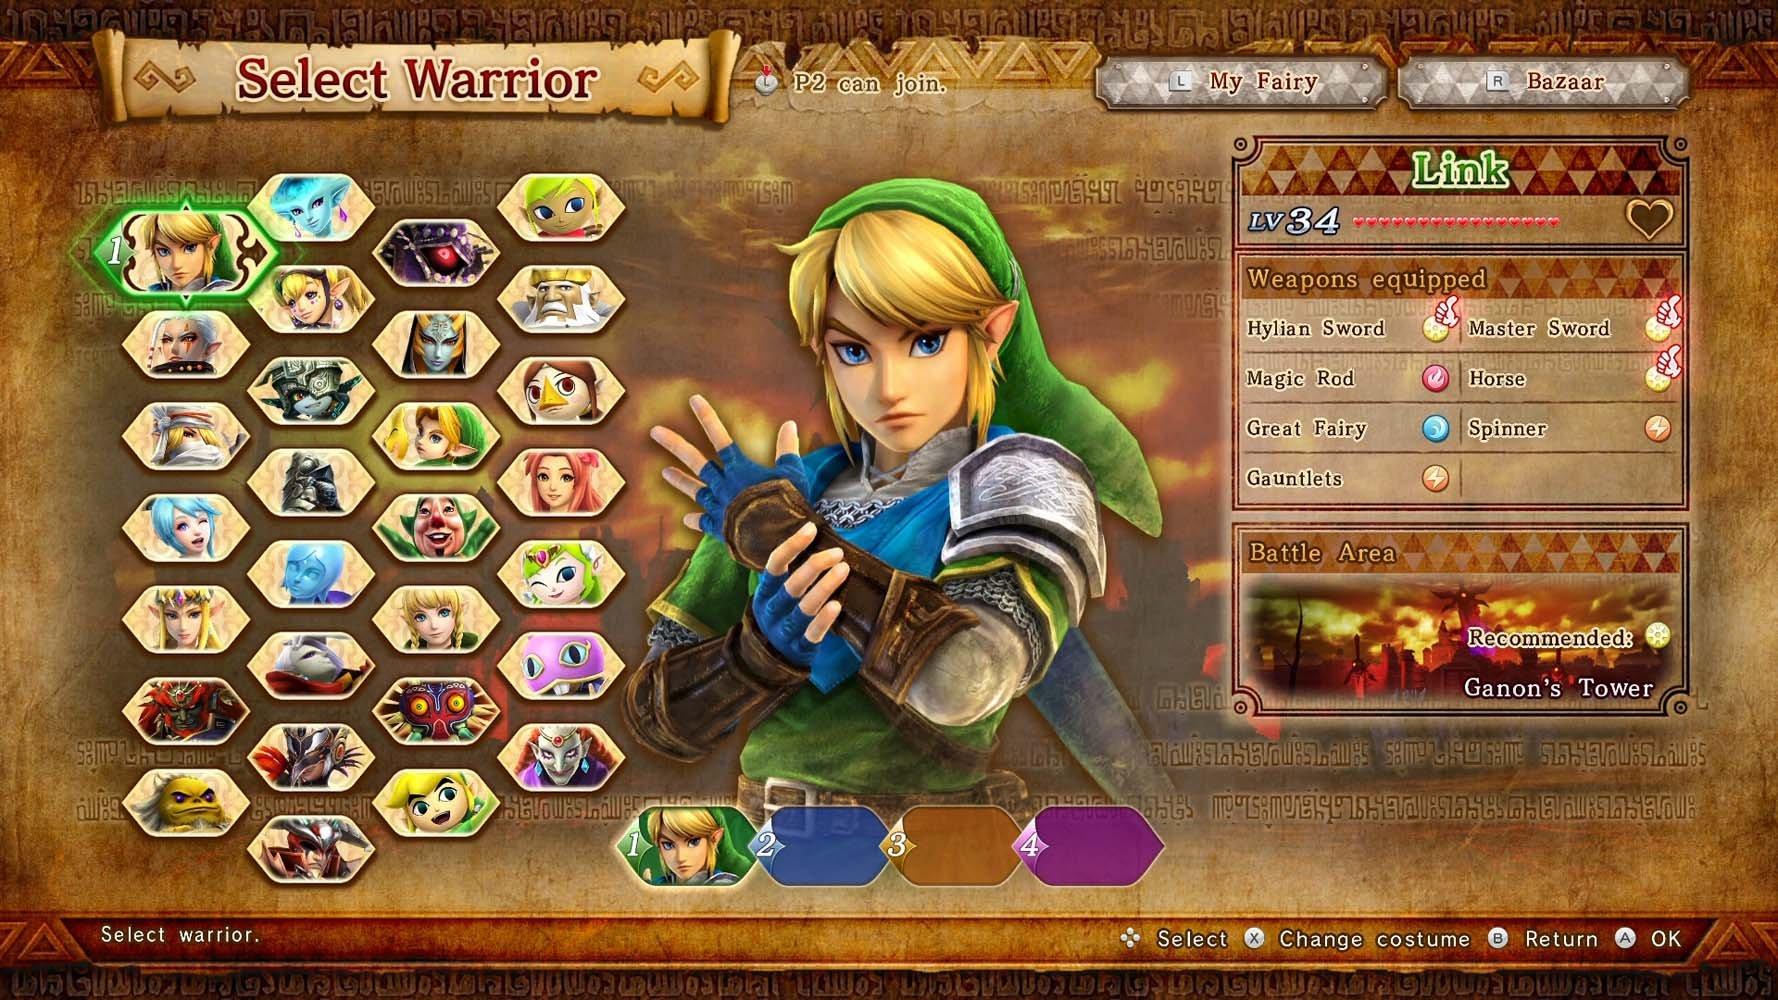 Hyrule Warriors: Definitive Edition - Nintendo Switch (digital) : Target